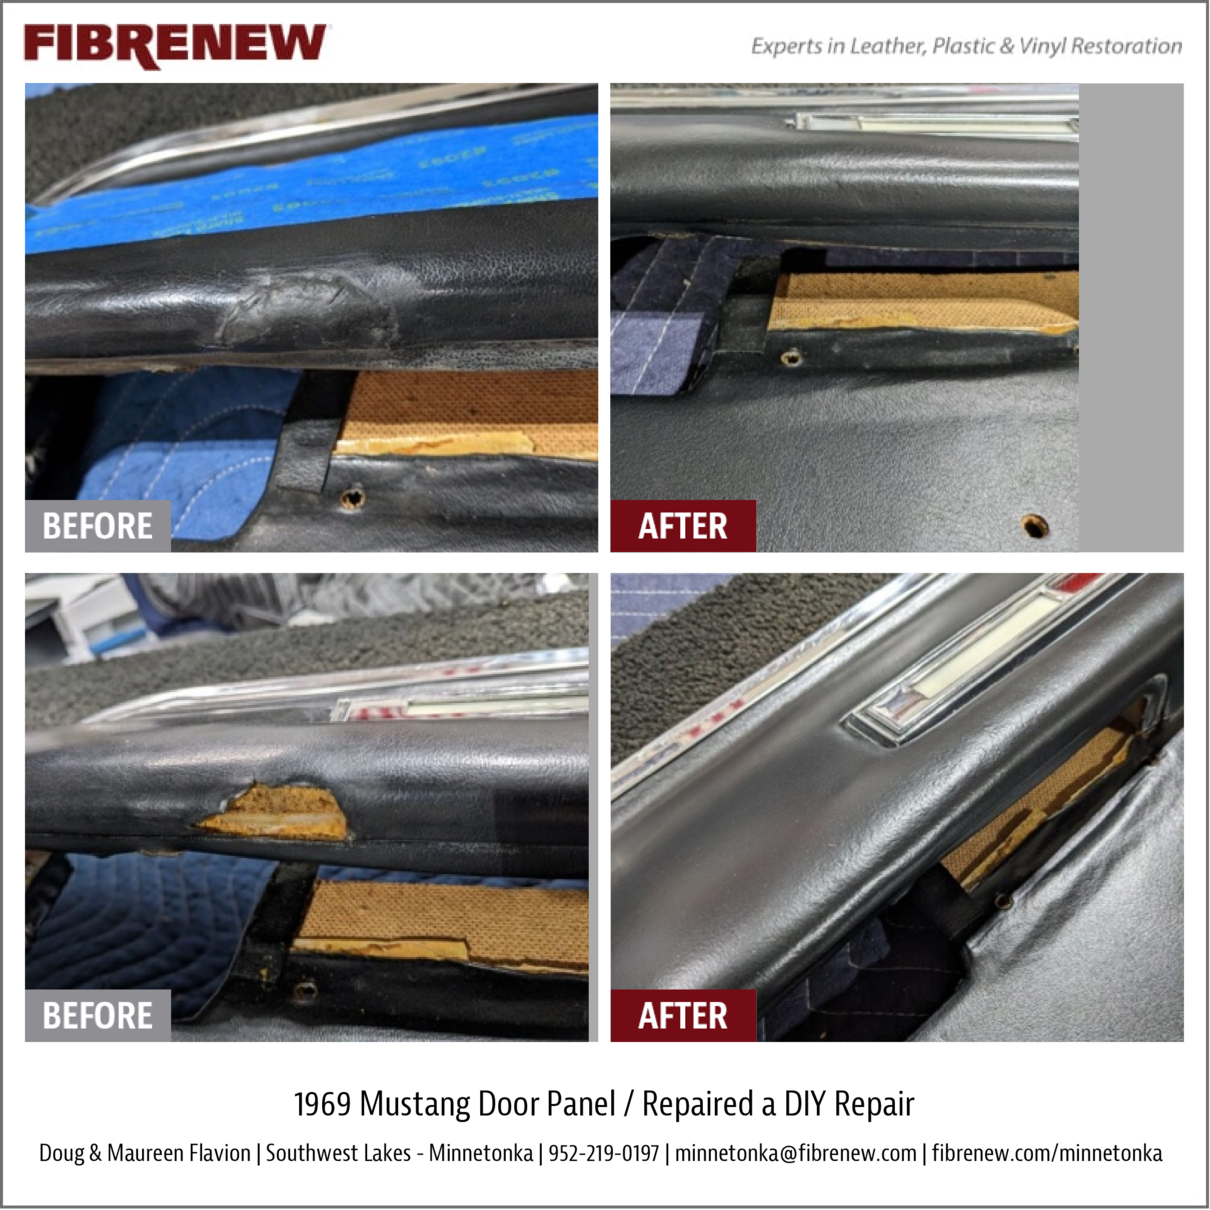 Car Leather Repair - Plastic & Vinyl Restoration: Fibrenew